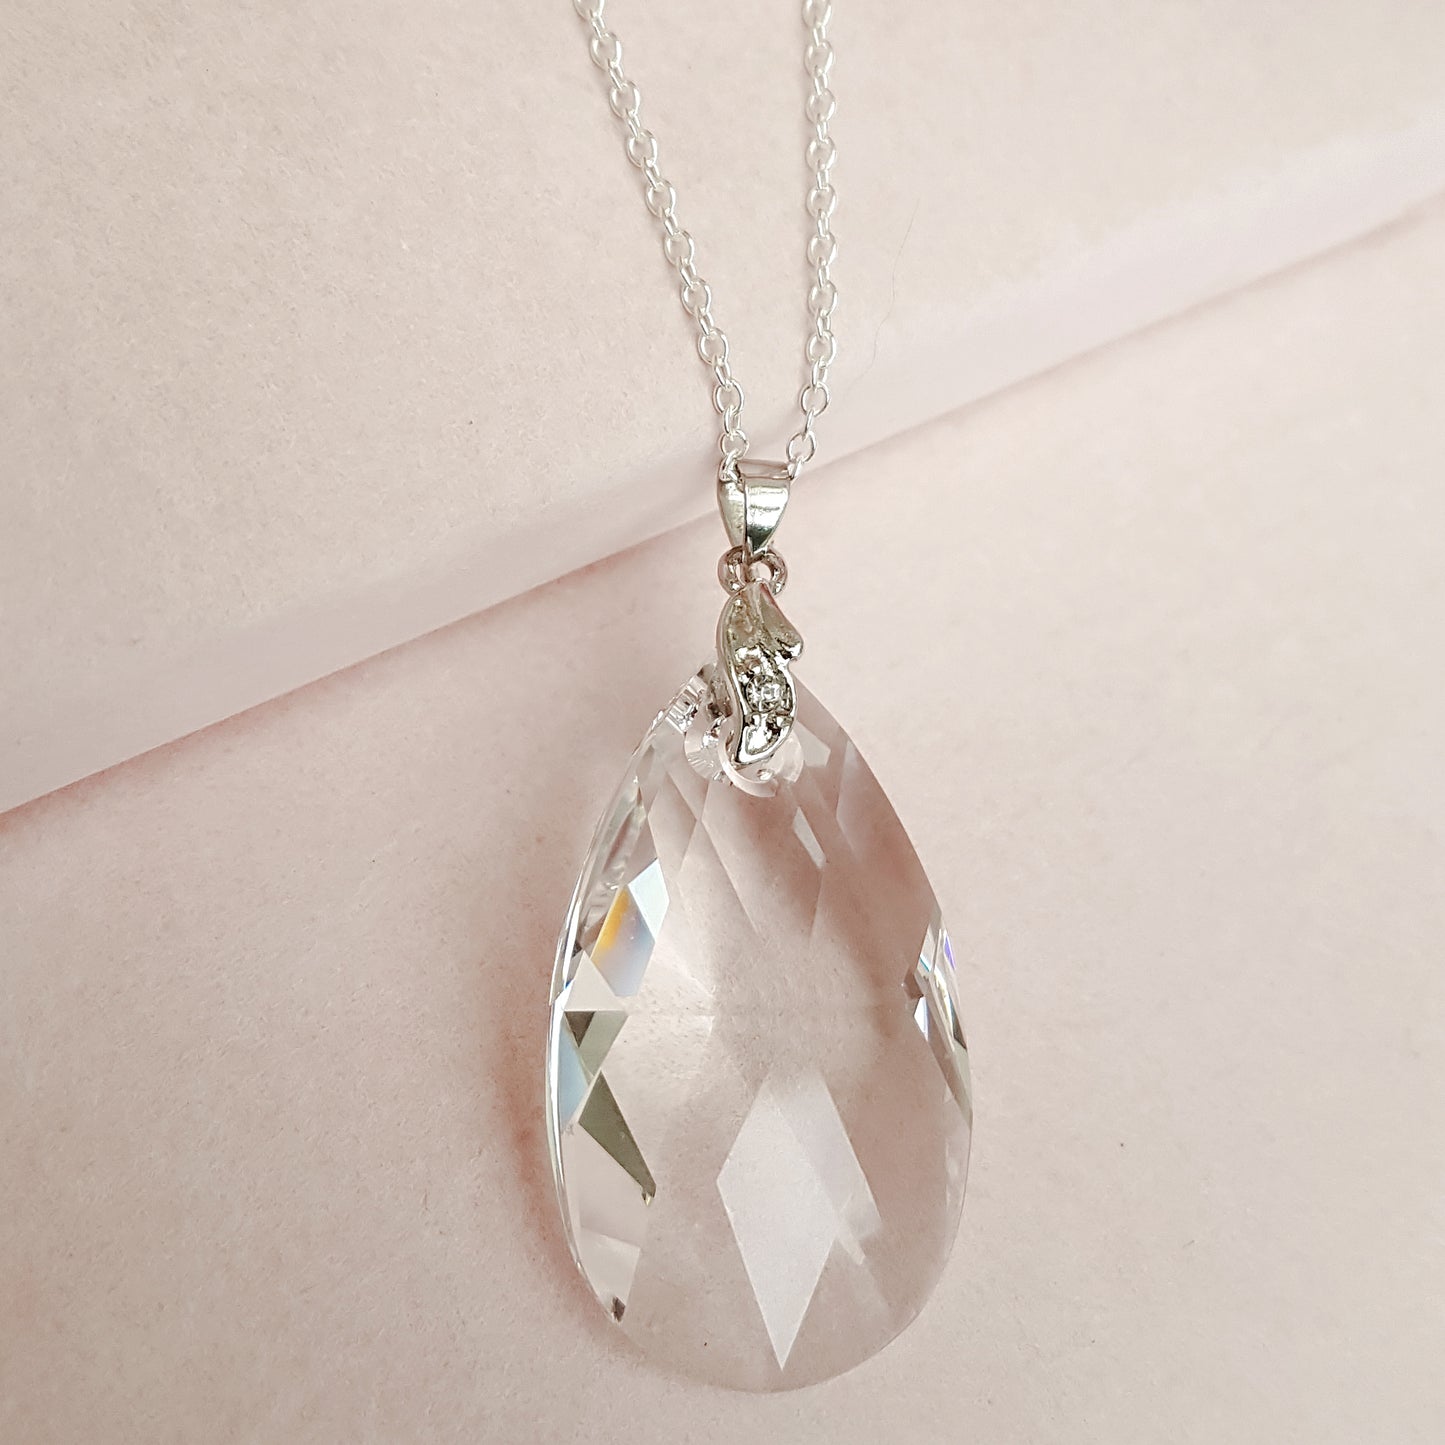 Dazzling Limited Edition Swarovski Crystal Teardrop Necklace